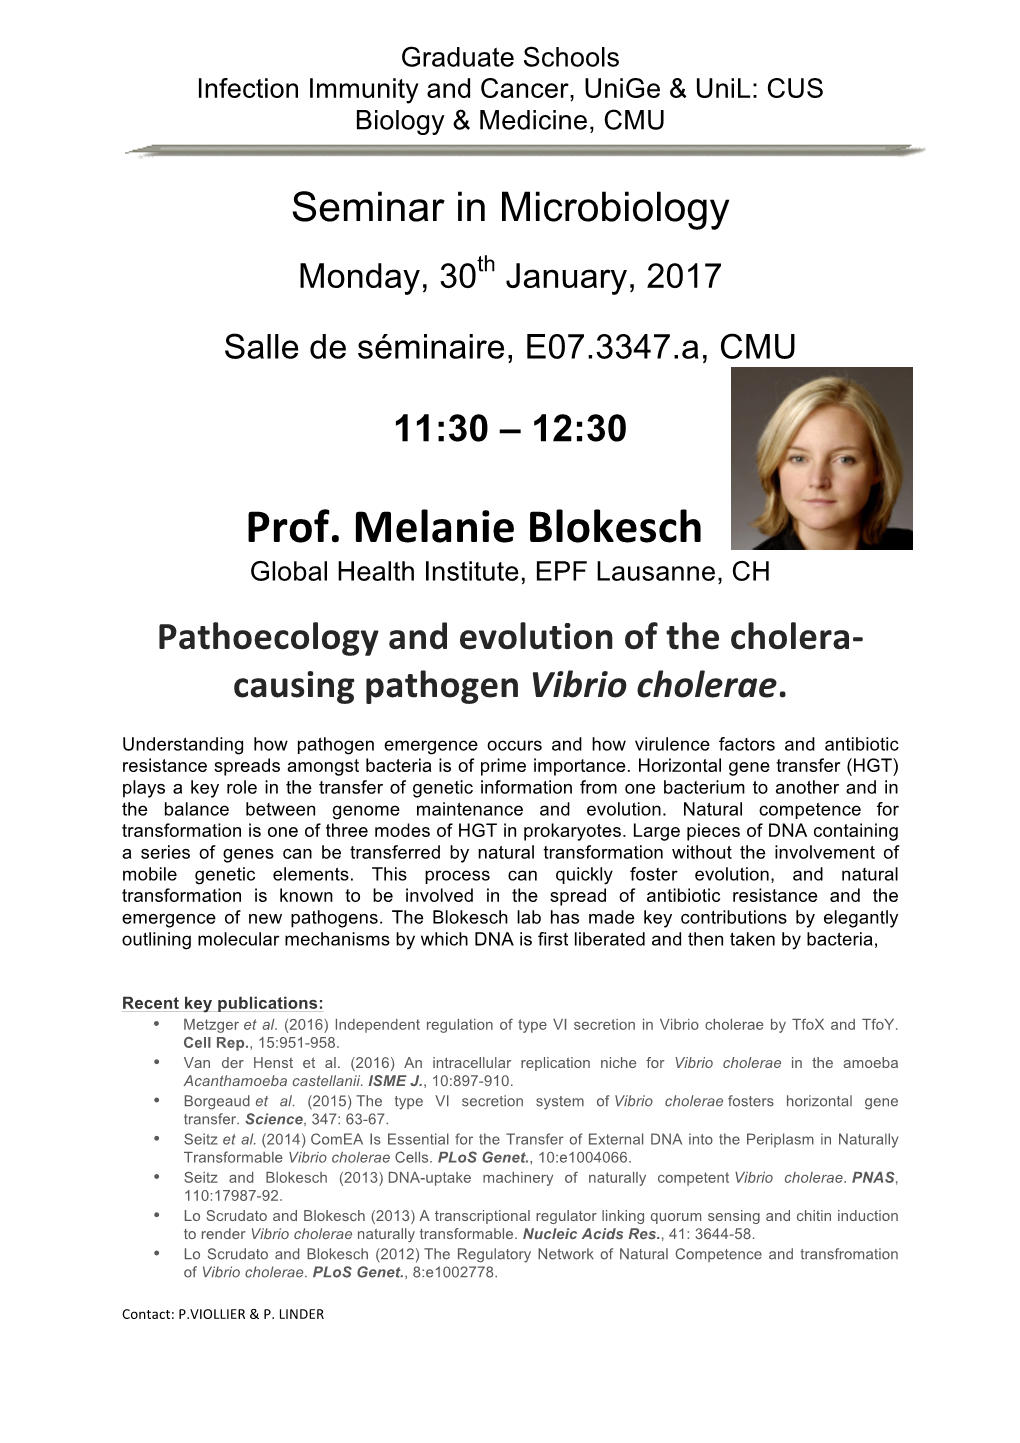 Prof. Melanie Blokesch Global Health Institute, EPF Lausanne, CH